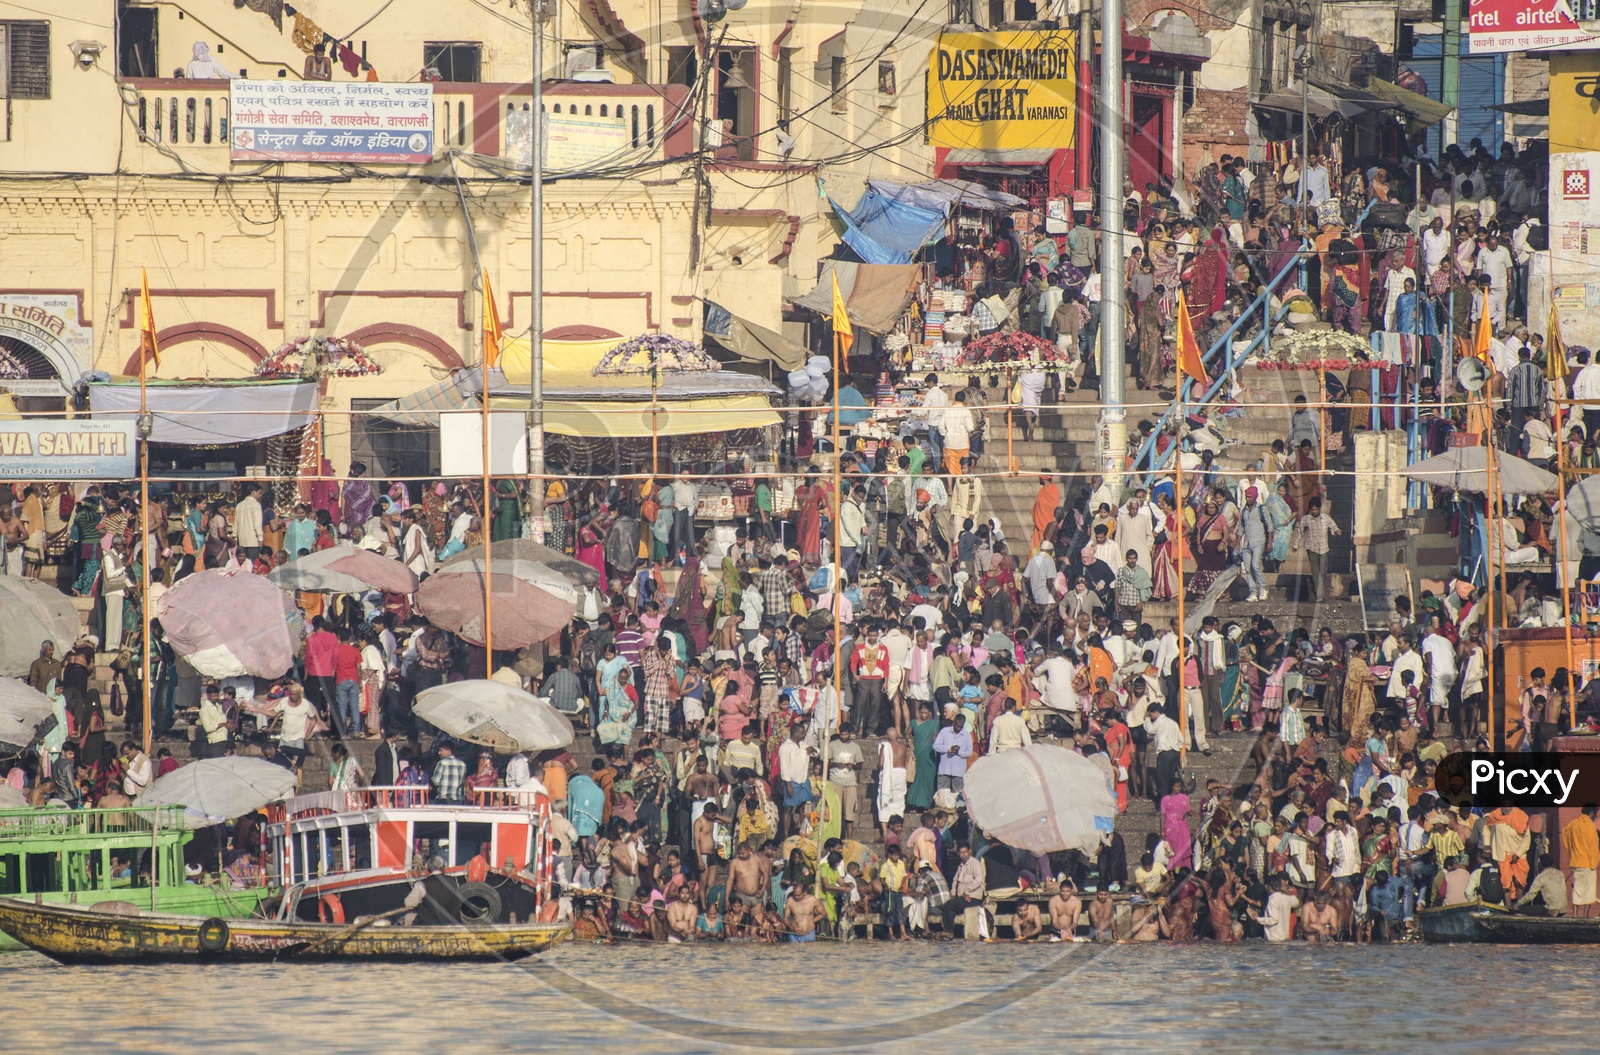 Varanasi River Bath